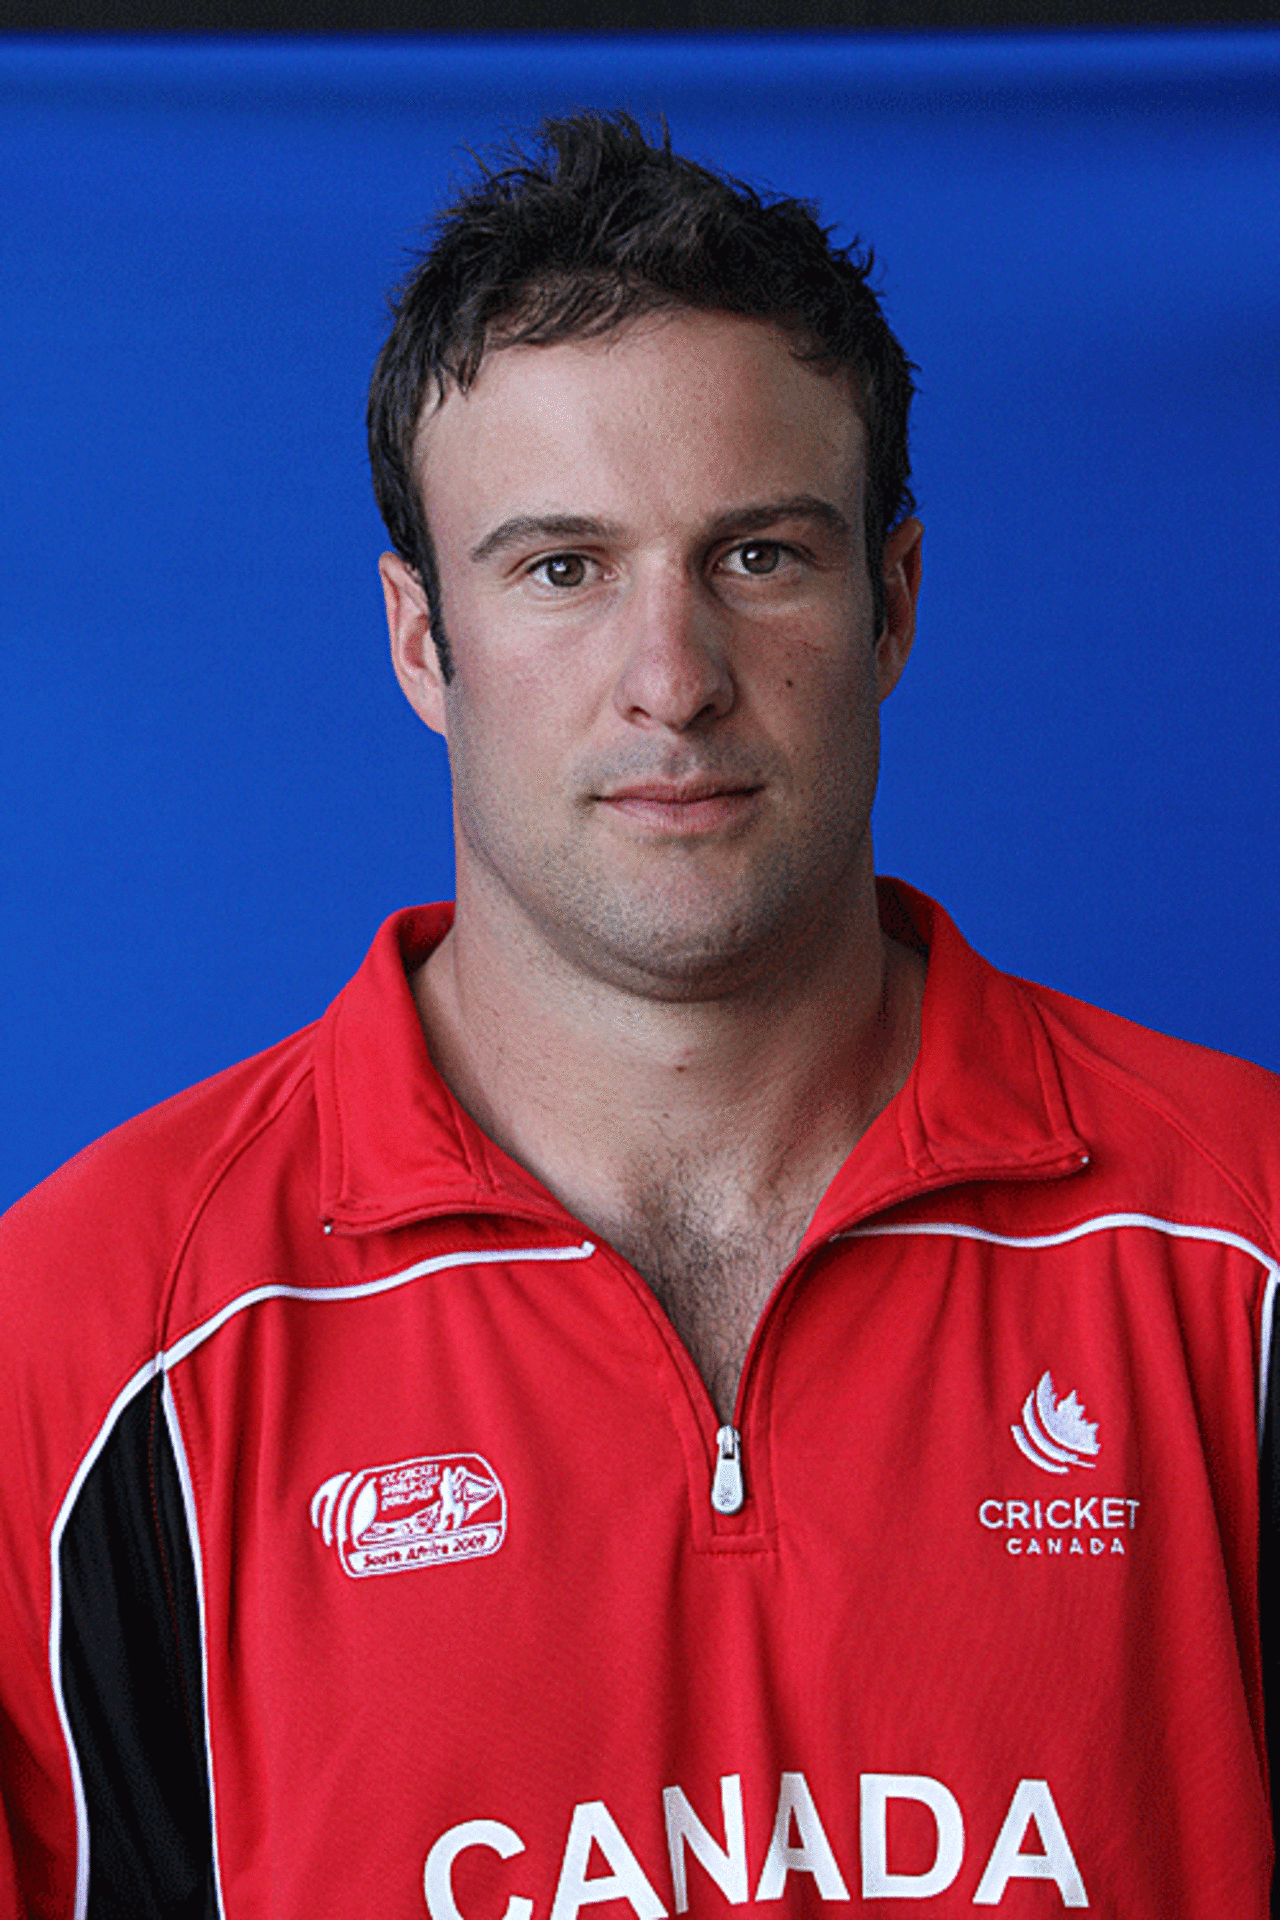 Geoff Barnett, player portrait, April 3, 2009